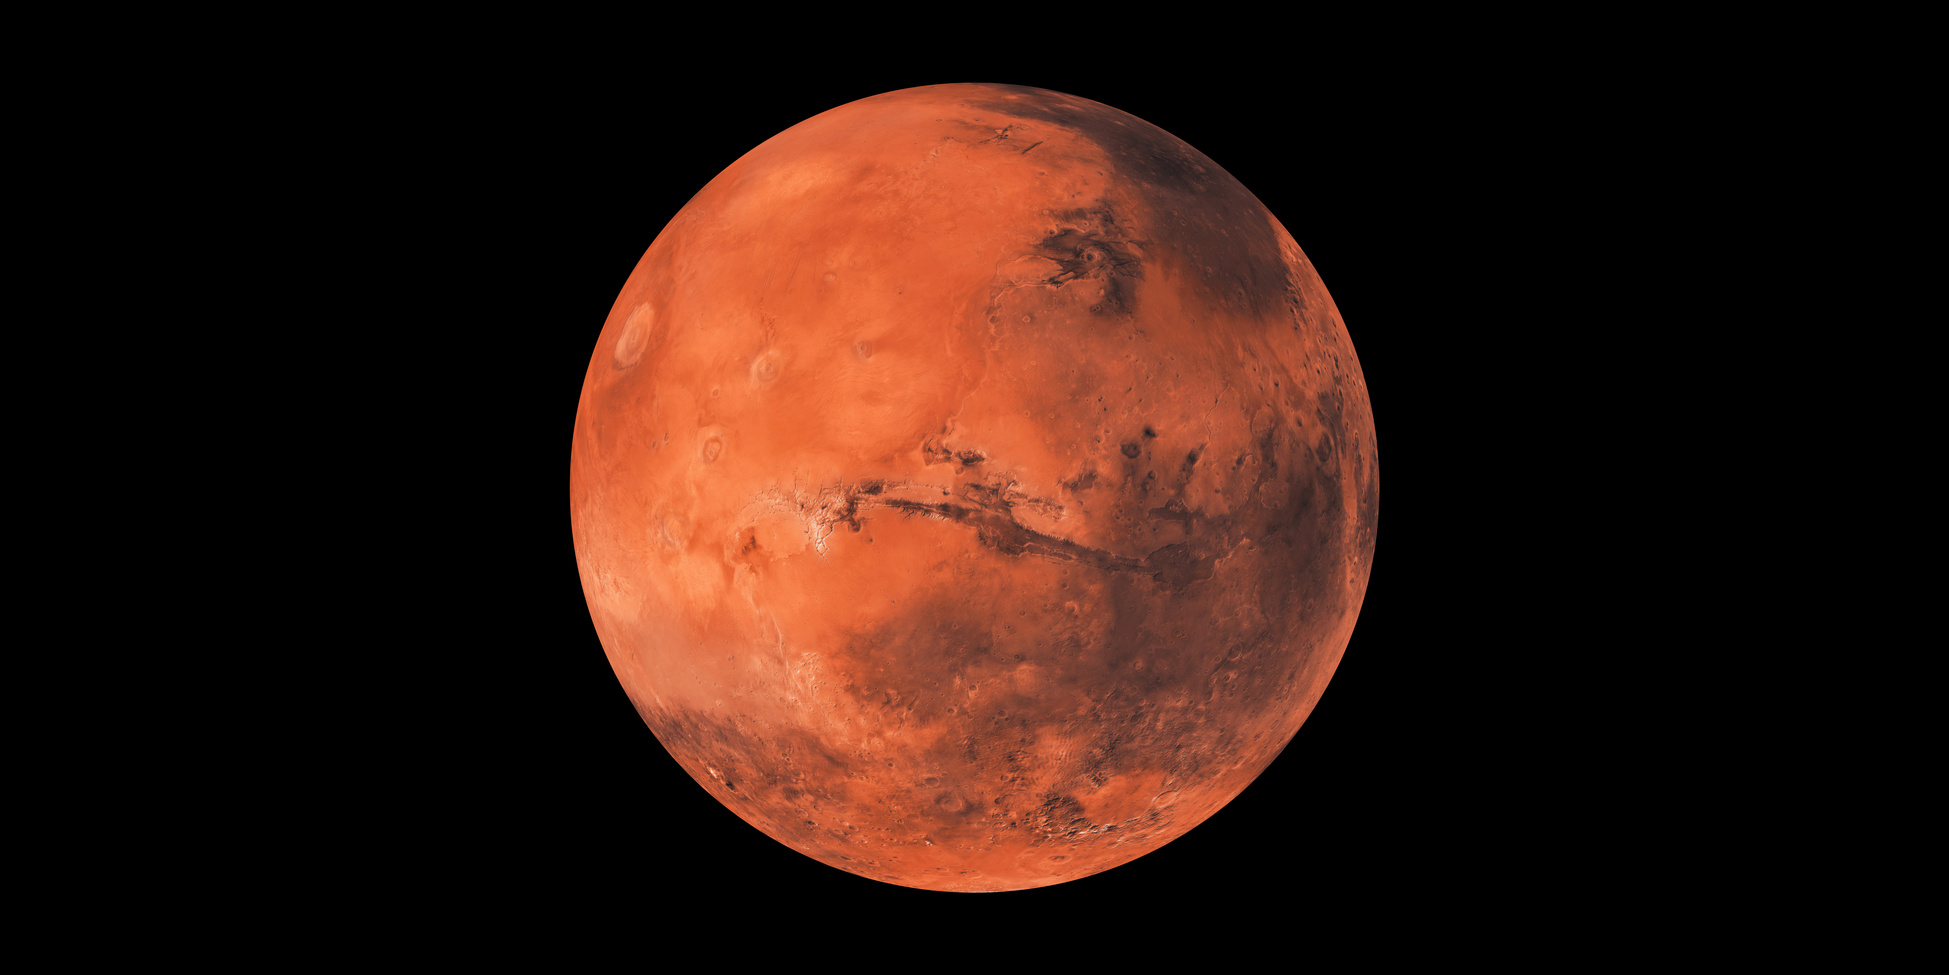 Y a-t-il de la vie sur Mars ? © Martin, fotolia